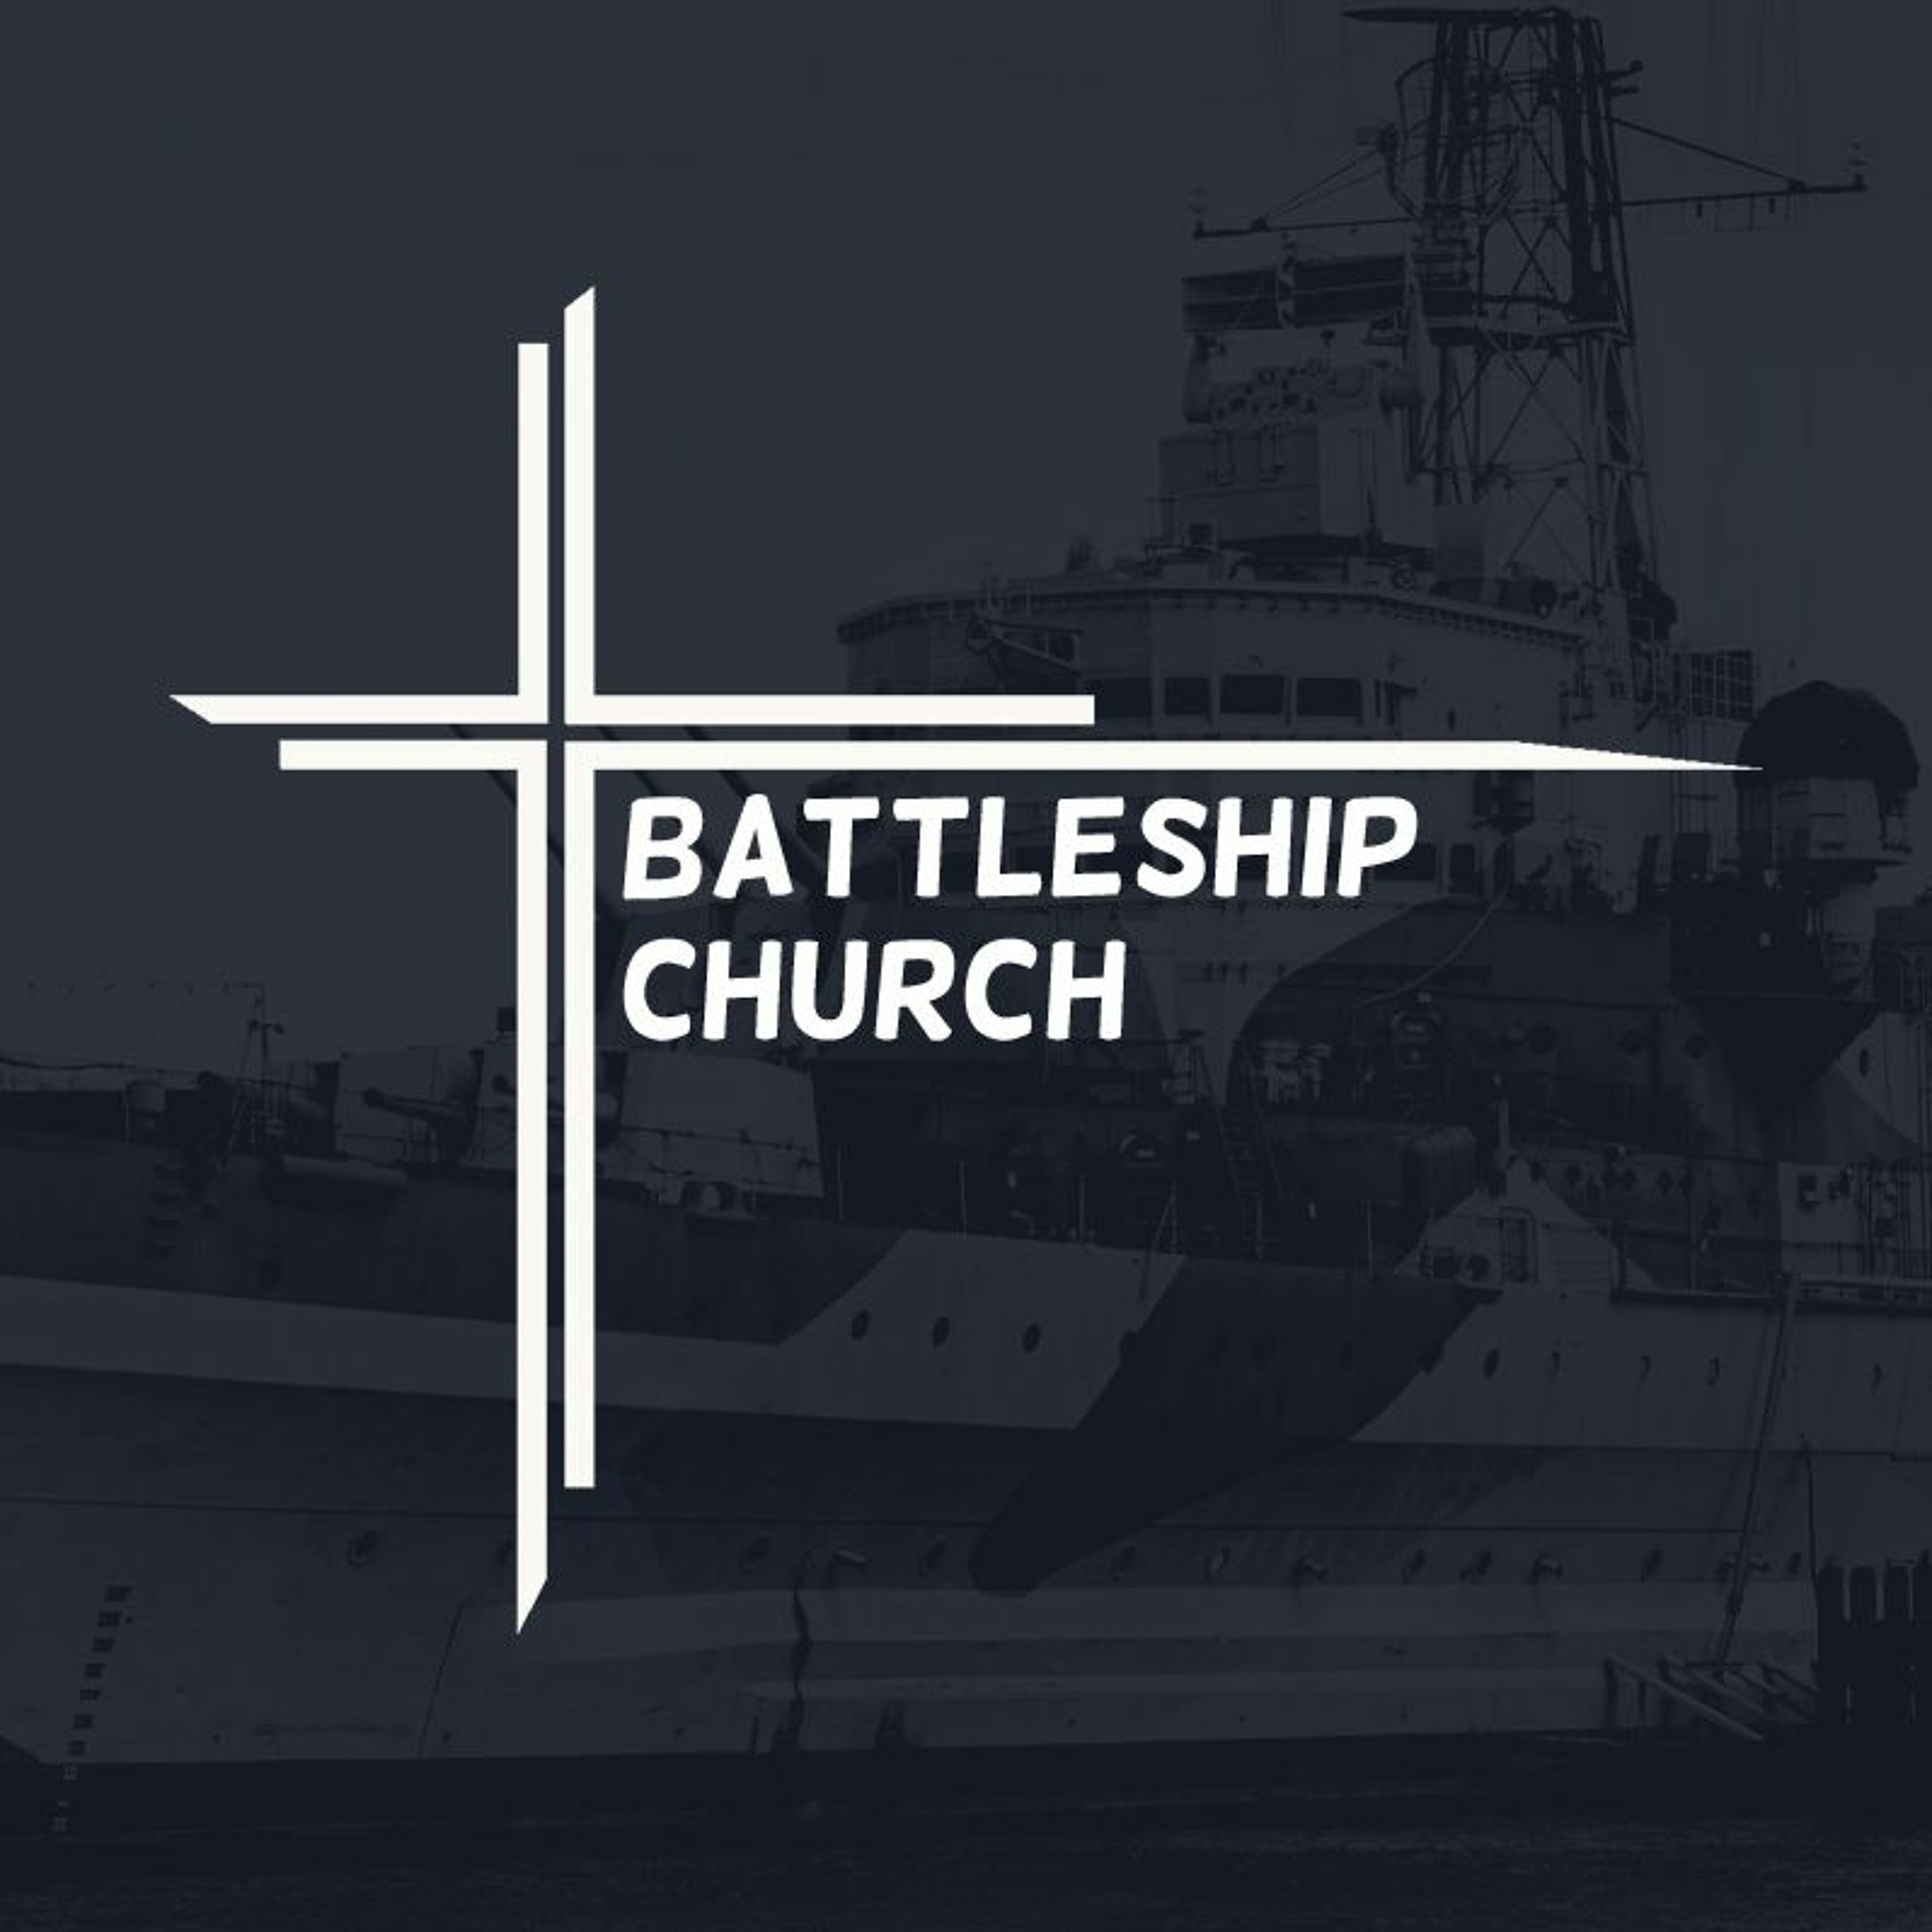 Battleship church | Discipleship